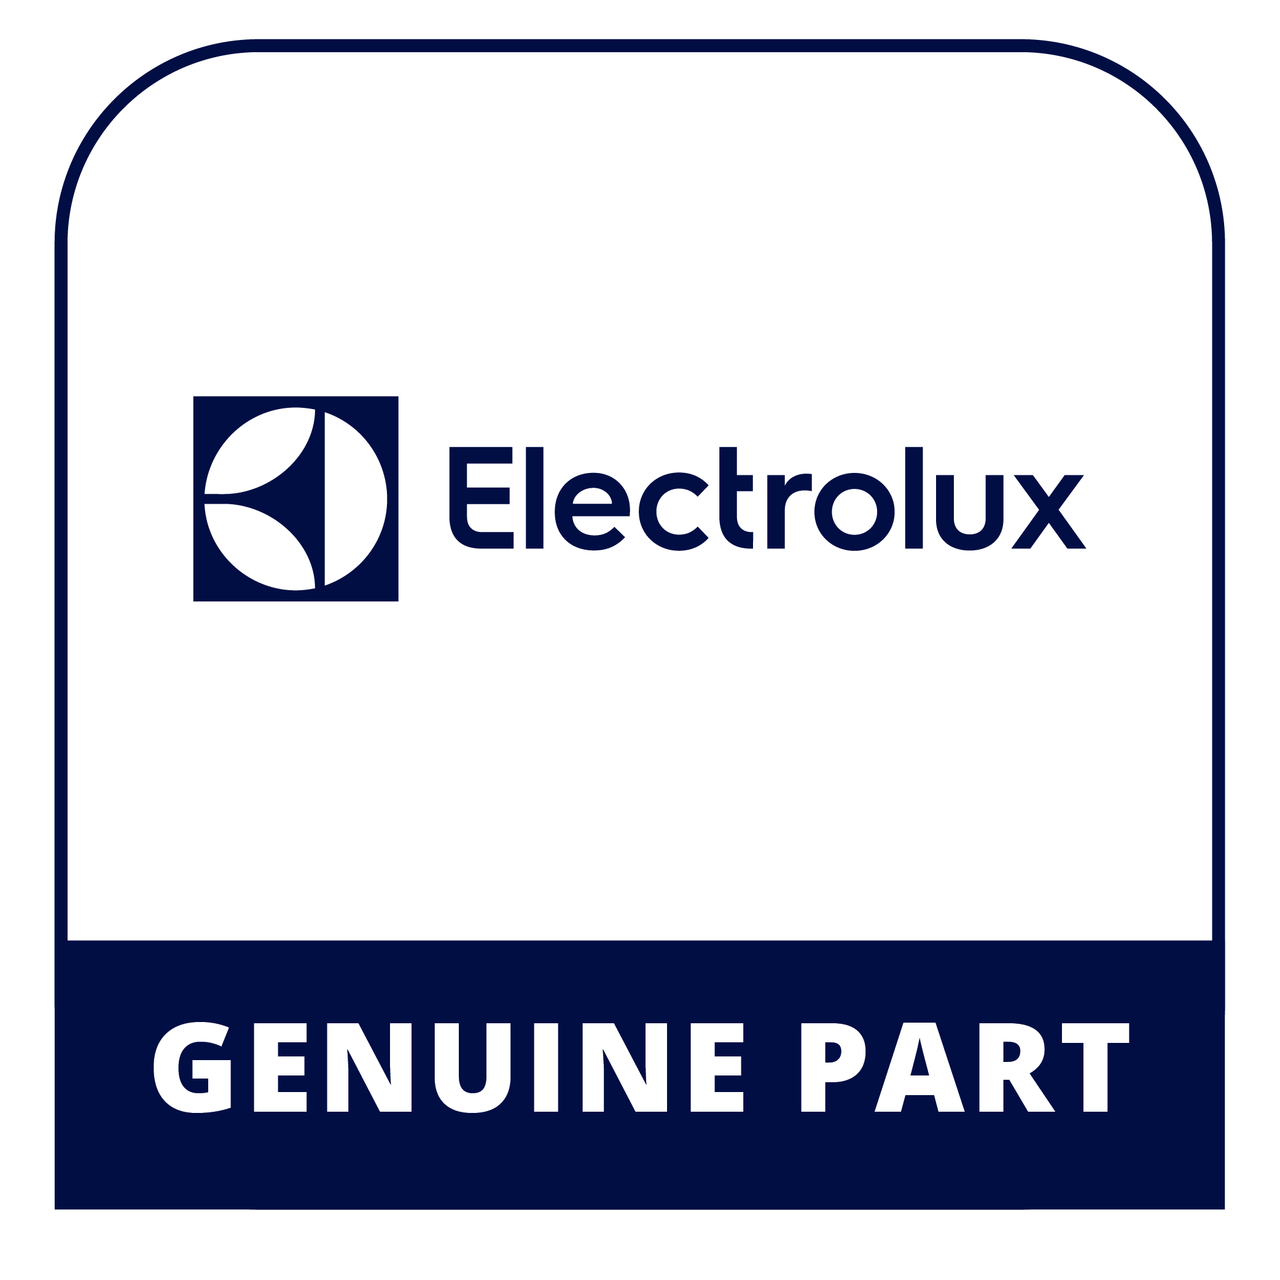 Frigidaire - Electrolux 316455704 Board - Genuine Electrolux Part